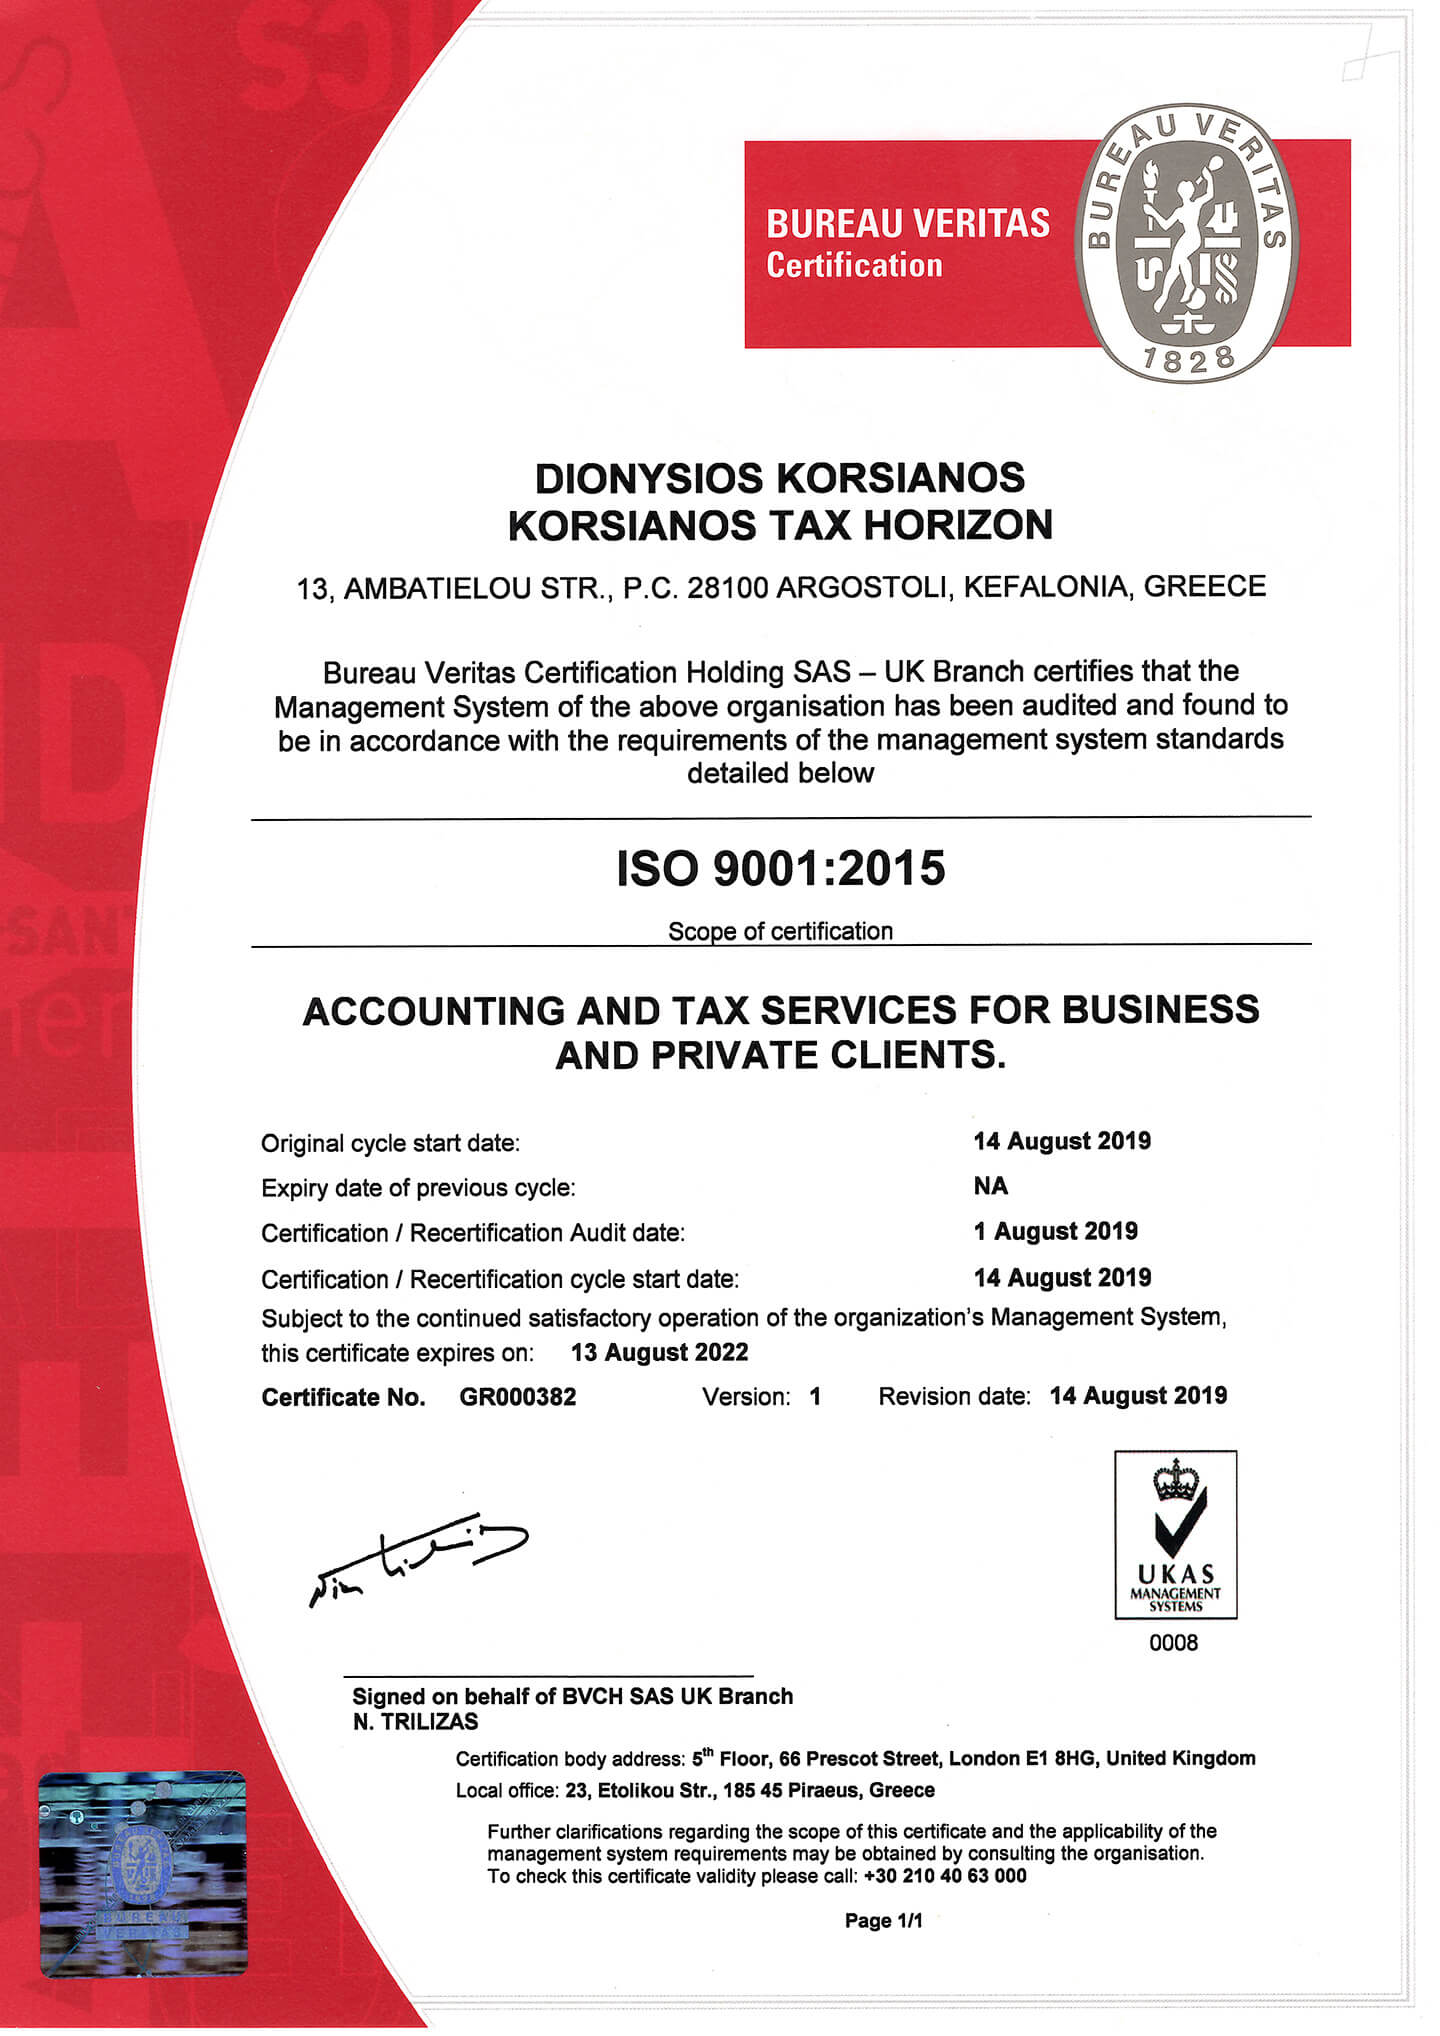 ISO 9001:2015 KORSIANOS certification